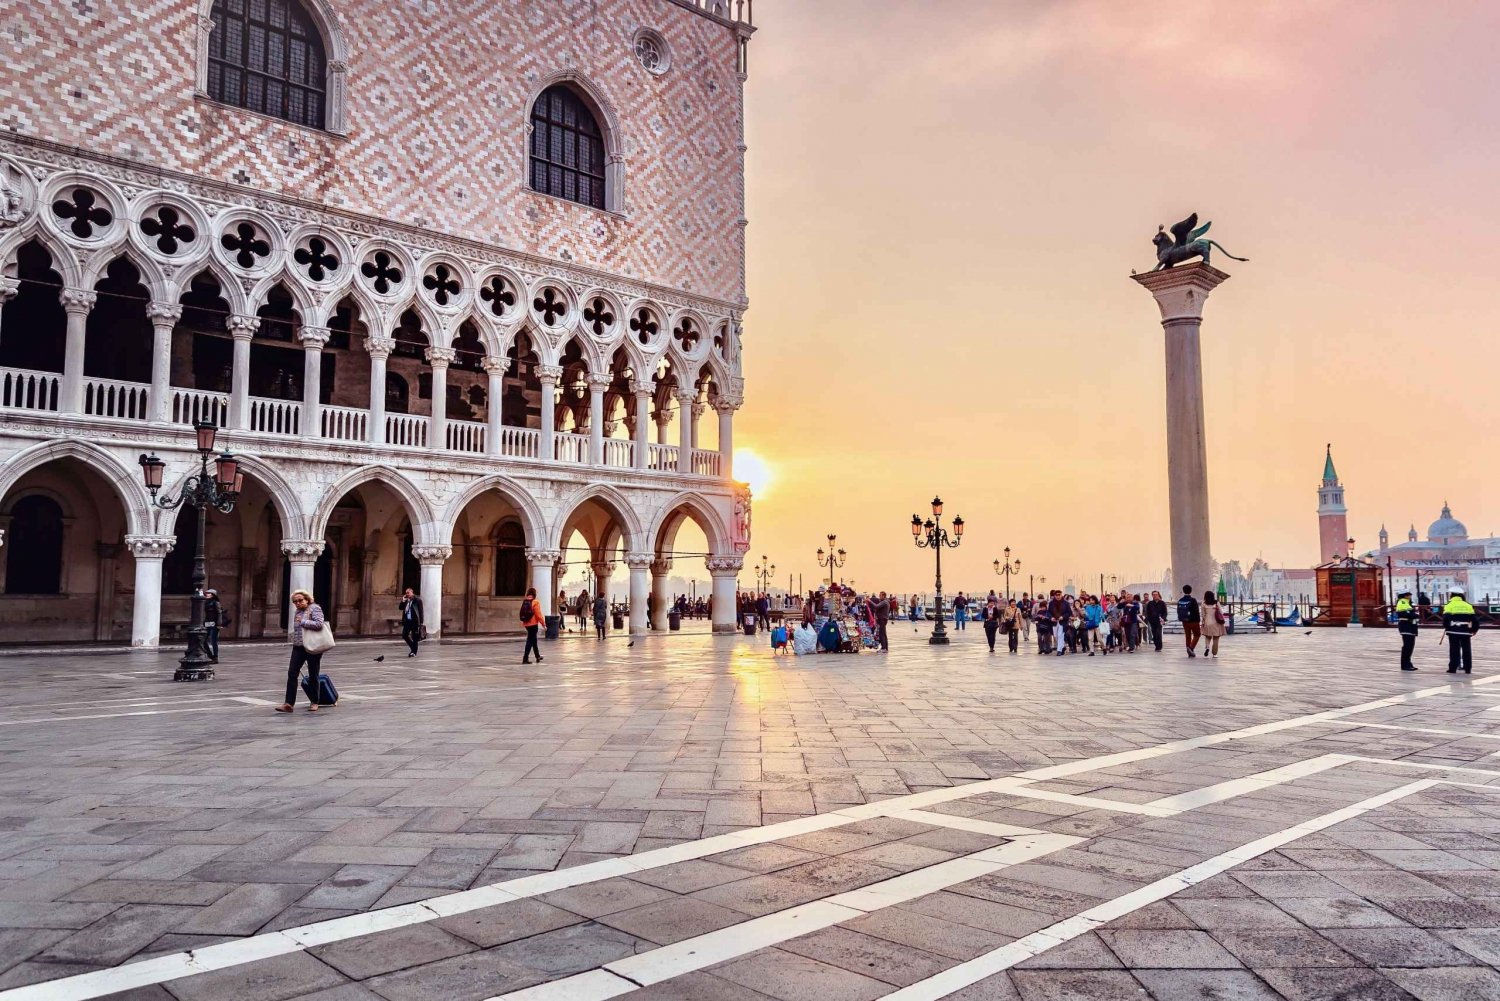 Venice: Gondola Ride and Skip the Line Doge's Palace Tour